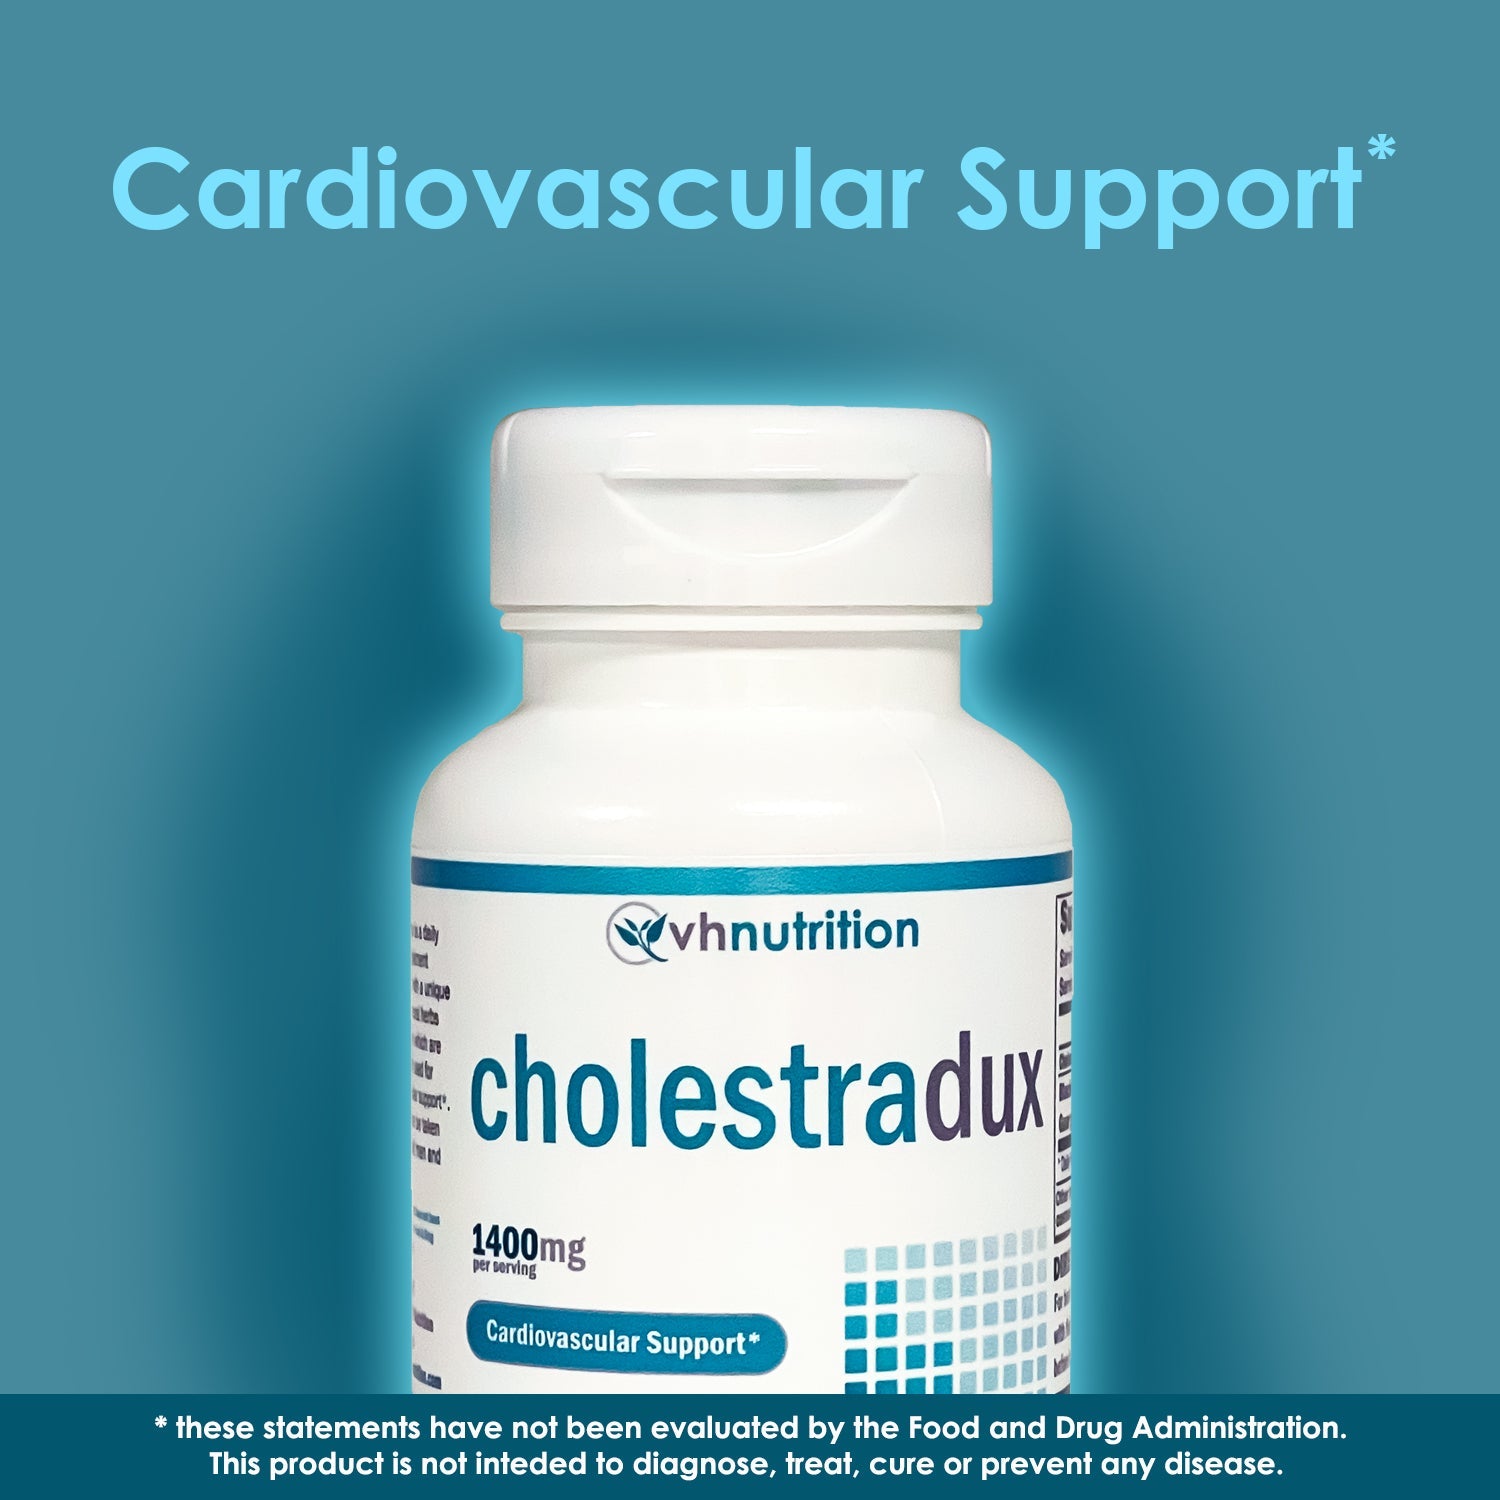 VH Nutrition CHOLESTRADUX | Cardiovascular Support* Supplement | Black Tea Extract, Chlorella, Garlic Extract | 1400mg Proprietary Formula | 60 Capsules